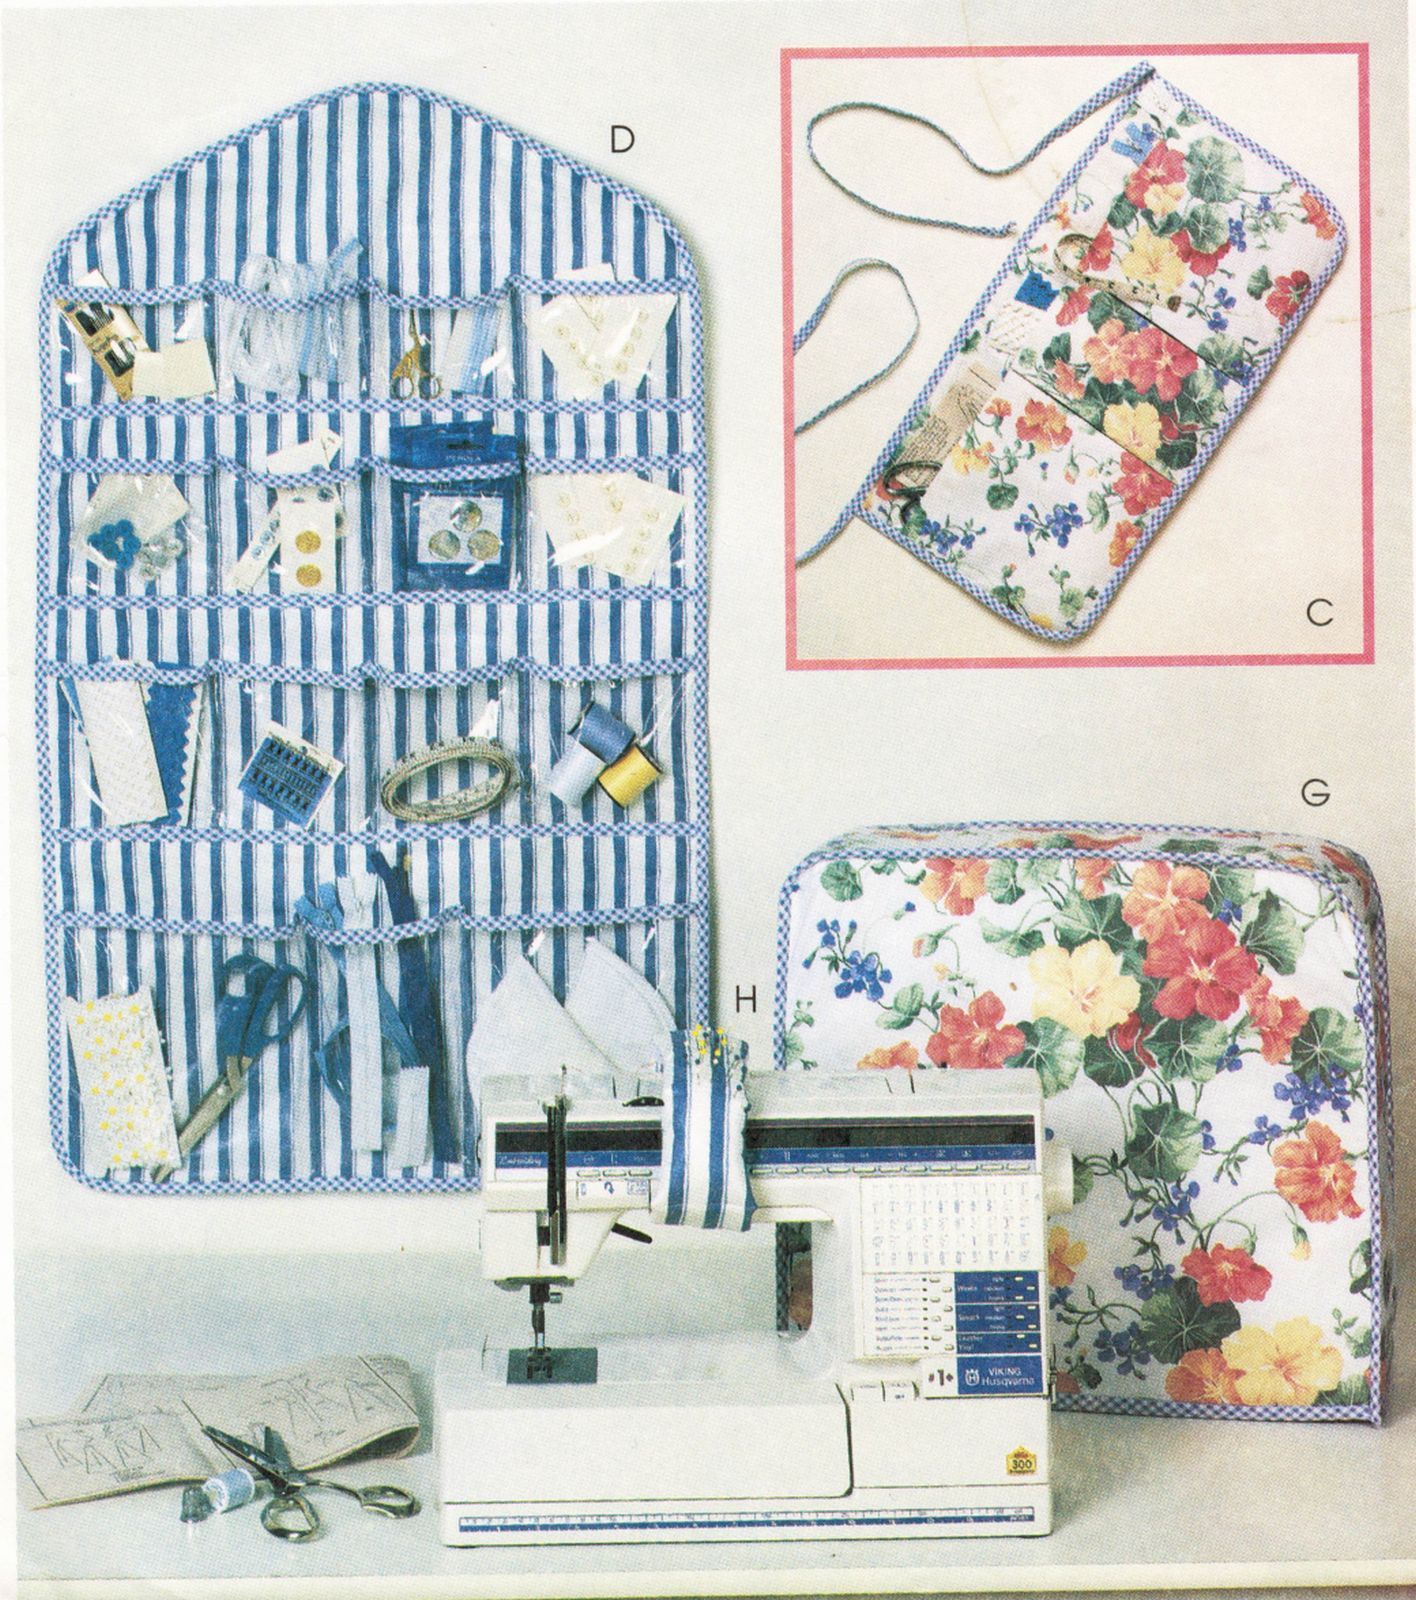 Sew Kit Accessories Serger Cover Apron Organizer Pincushion Chair Bag Pattern - $11.99